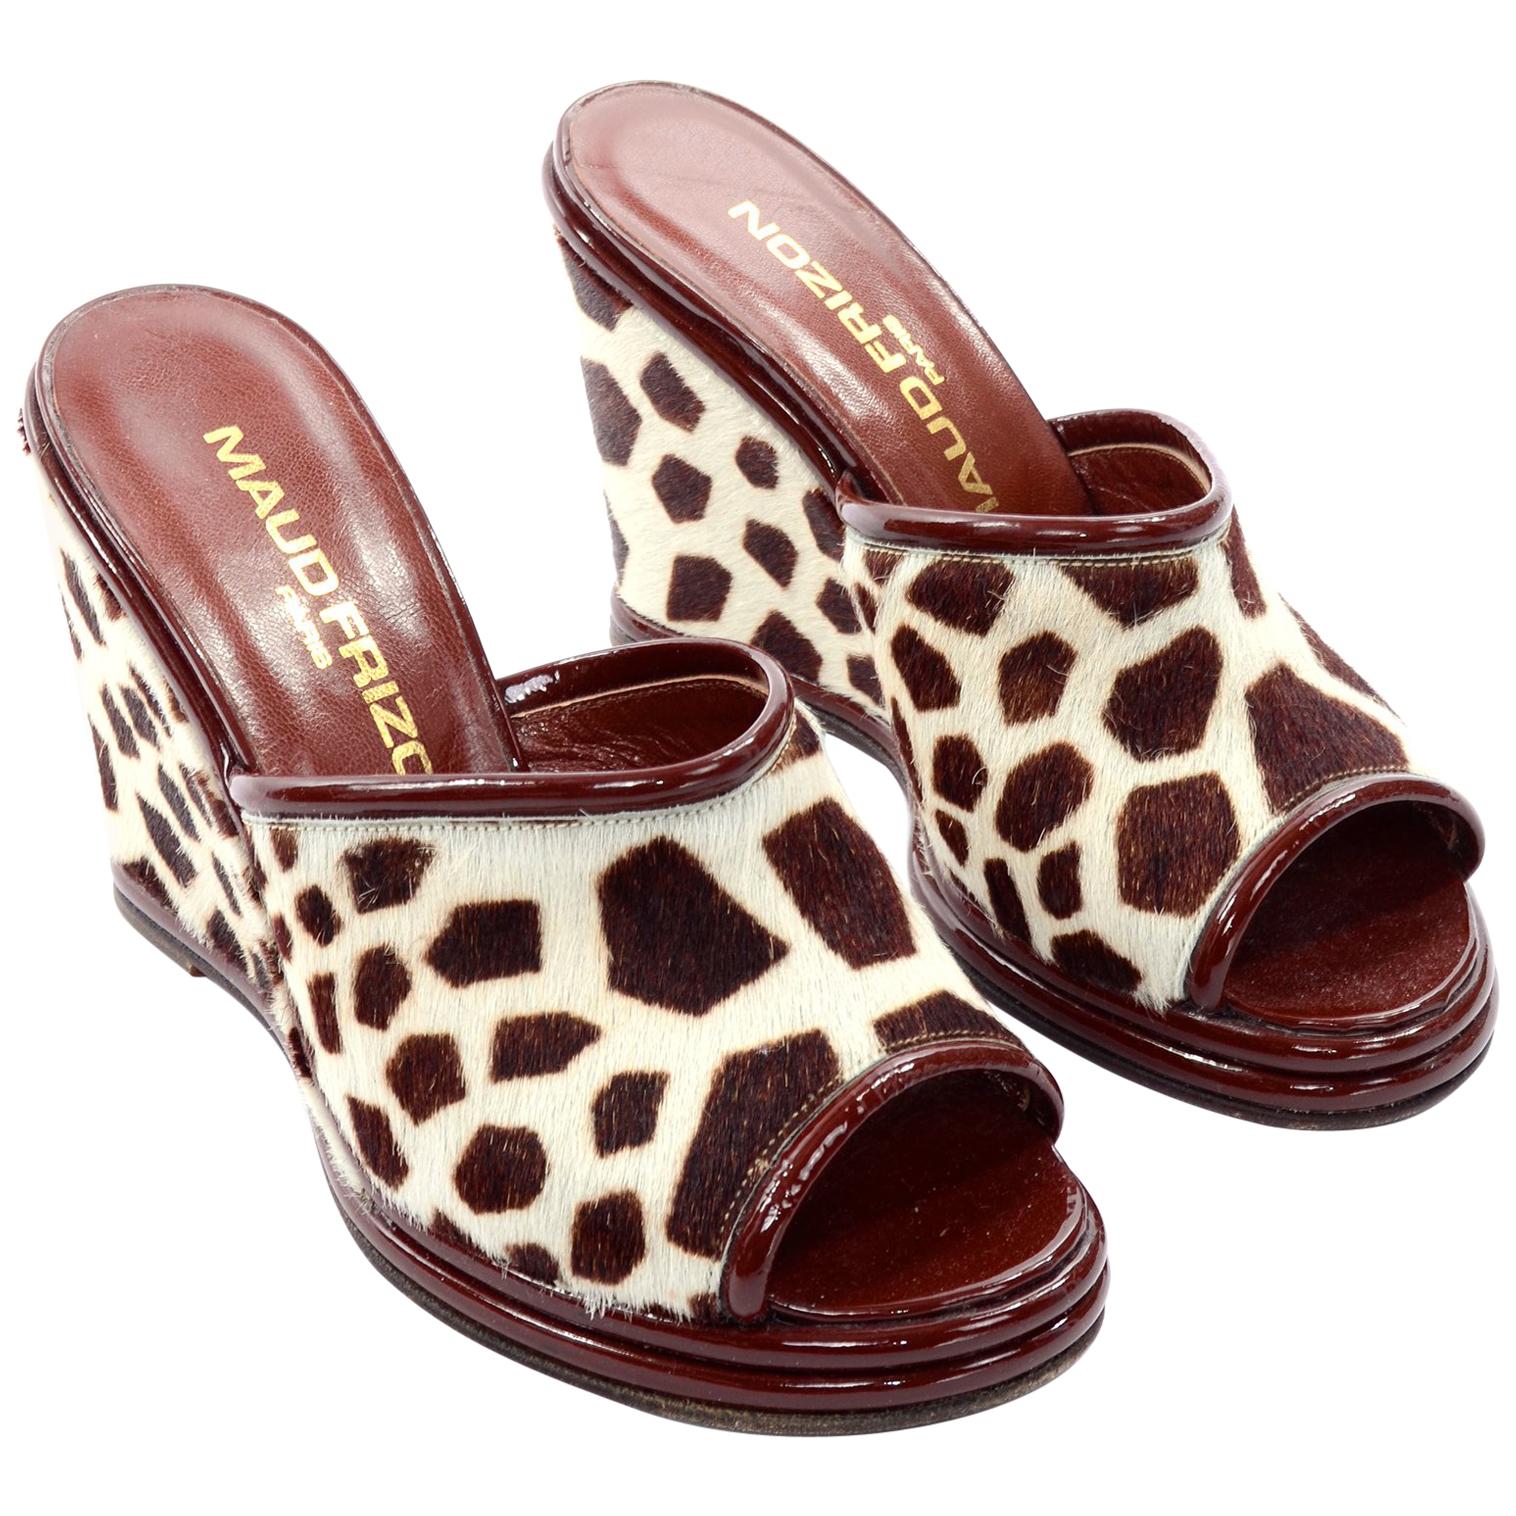 New Maud Frizon Paris Wedge Heel Open Toe Shoes in Pony Fur Giraffe Print 7.5